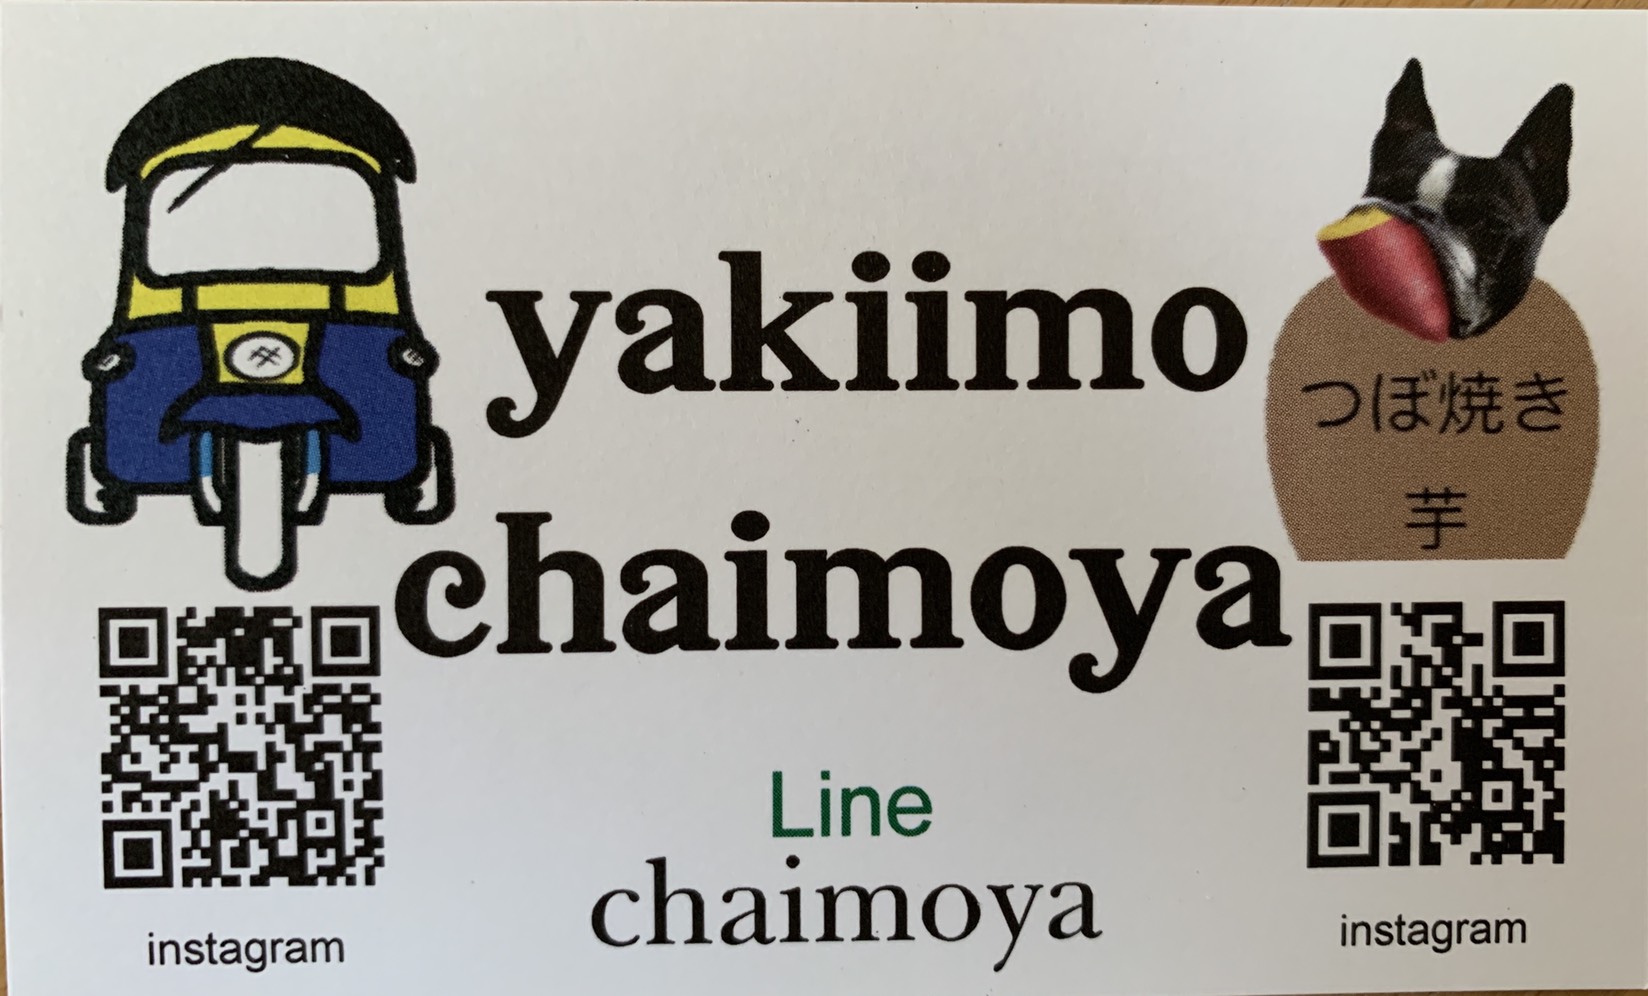 Chaimoyaトゥクトゥク移動販売焼き芋店 日本トゥクトゥク総合研究所